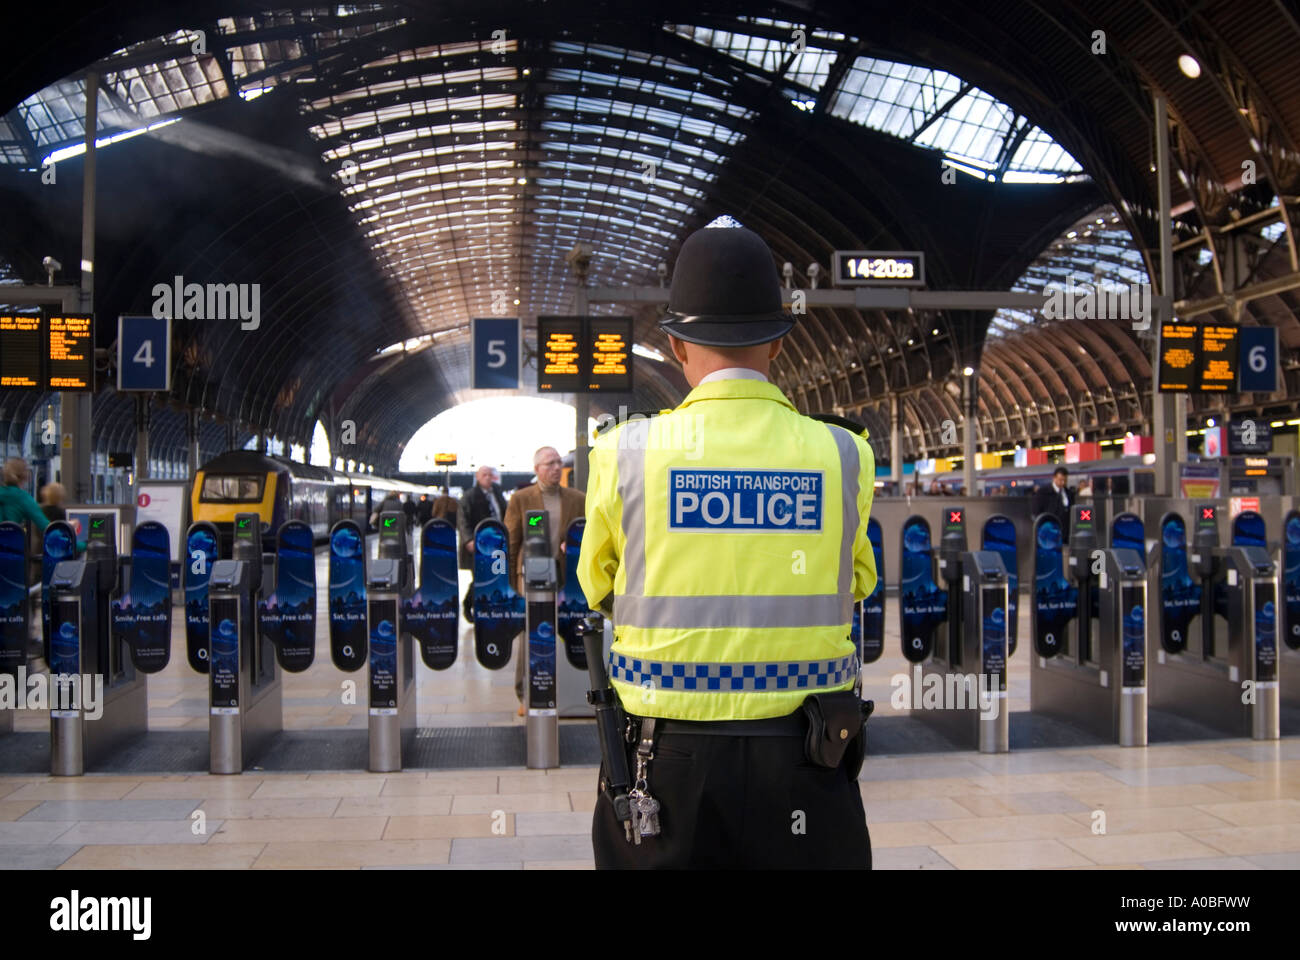 British Transport Police at Paddington train station London England UK Stock Photo